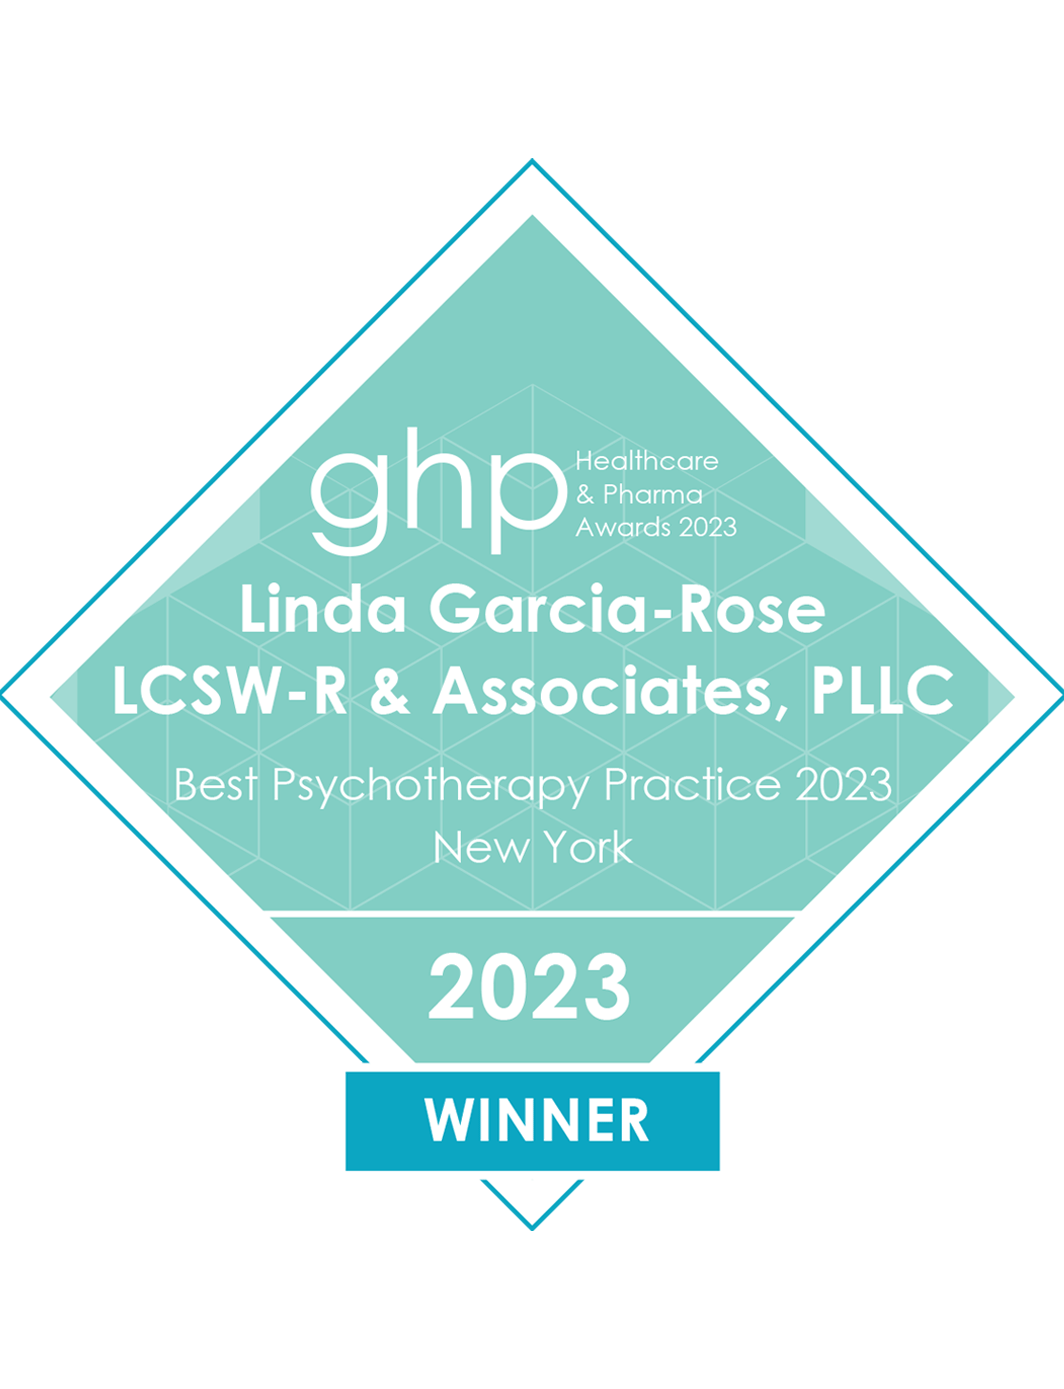 Jul23226_Linda-Garcia-Rose-LCSW-R-&-Associates,-PLLC_GHP-Healthcare-&-Pharma-Awards-2023--Winners-Badge.gif